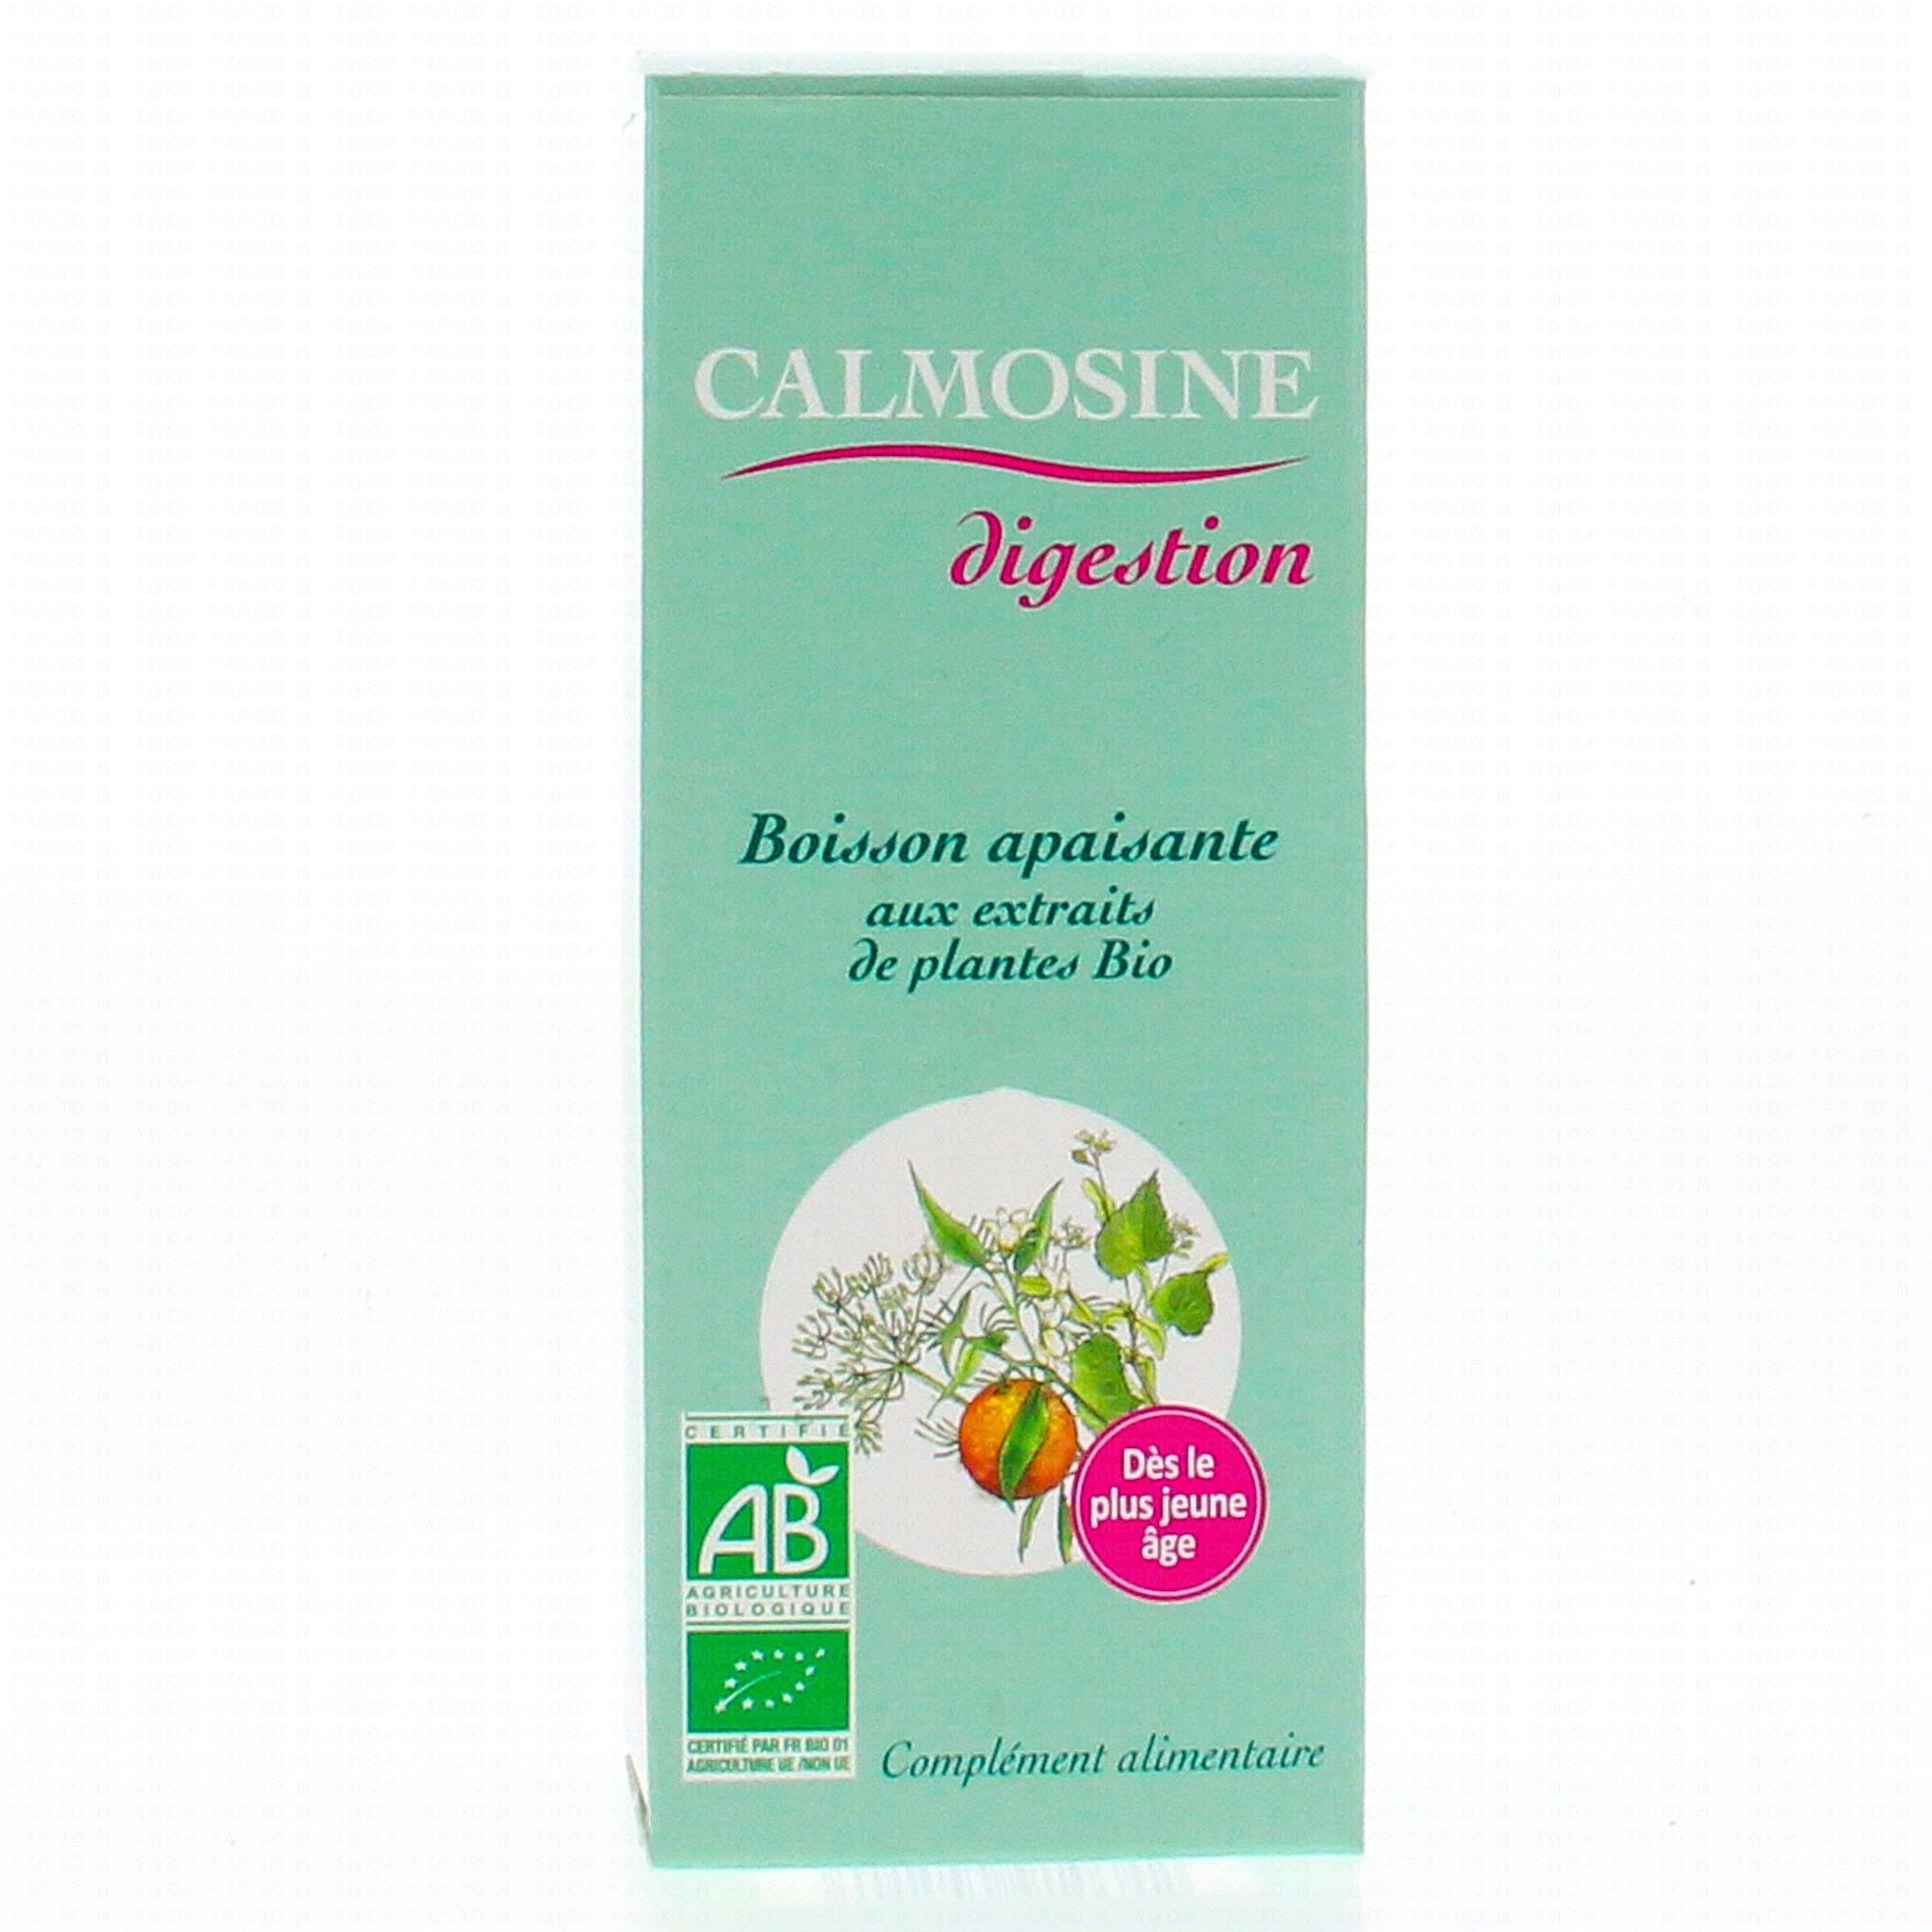 BABYSPAMYL Colique du nourrisson flacon 30ml - Pharmacie Prado Mermoz